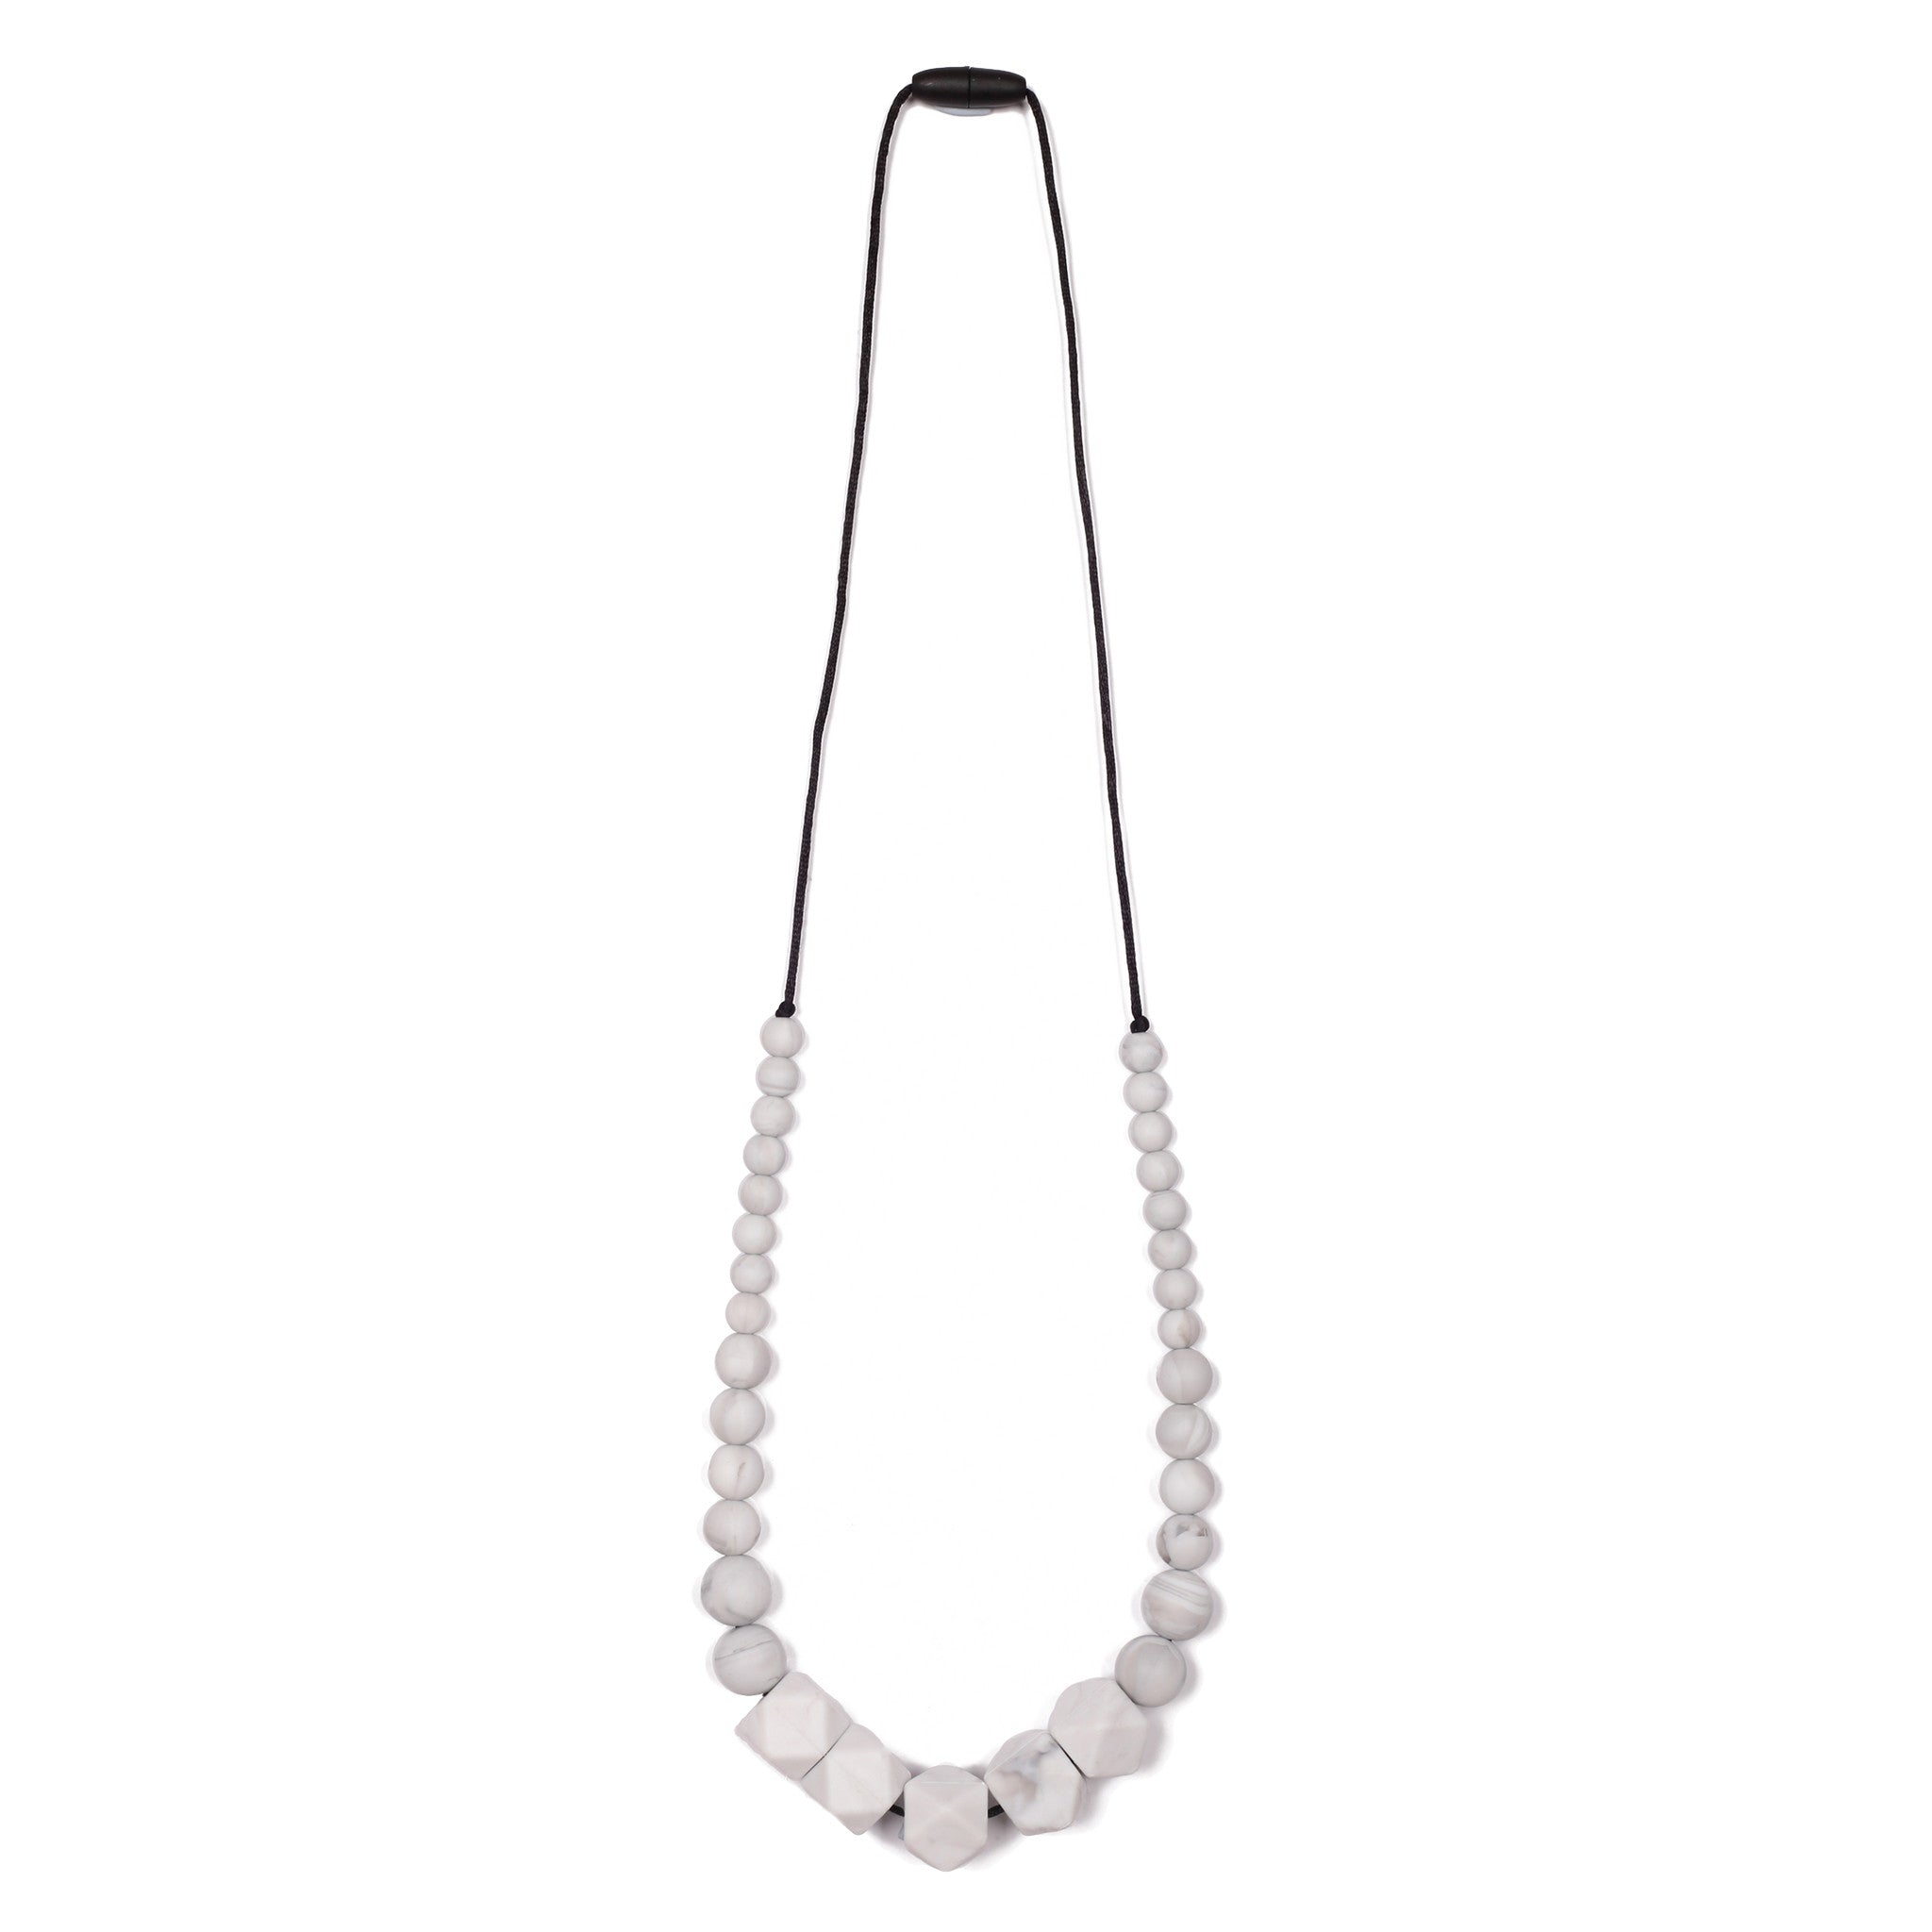 Madison Teething Necklace - Marble